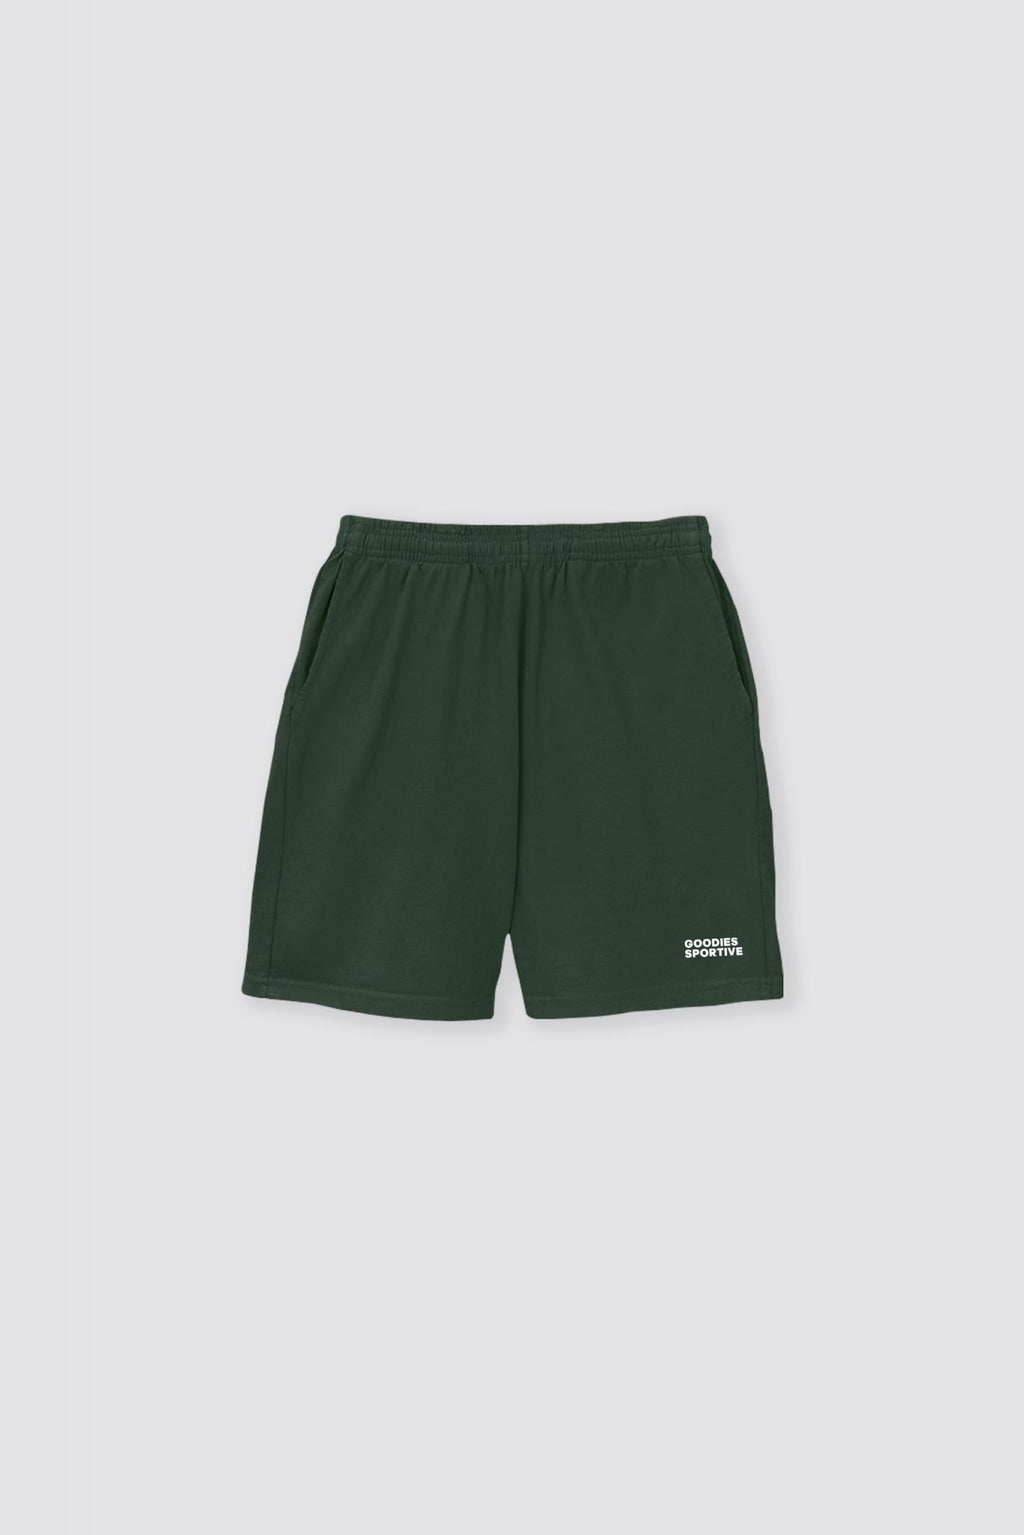 Goodies Sportive - Athleisure Green Short